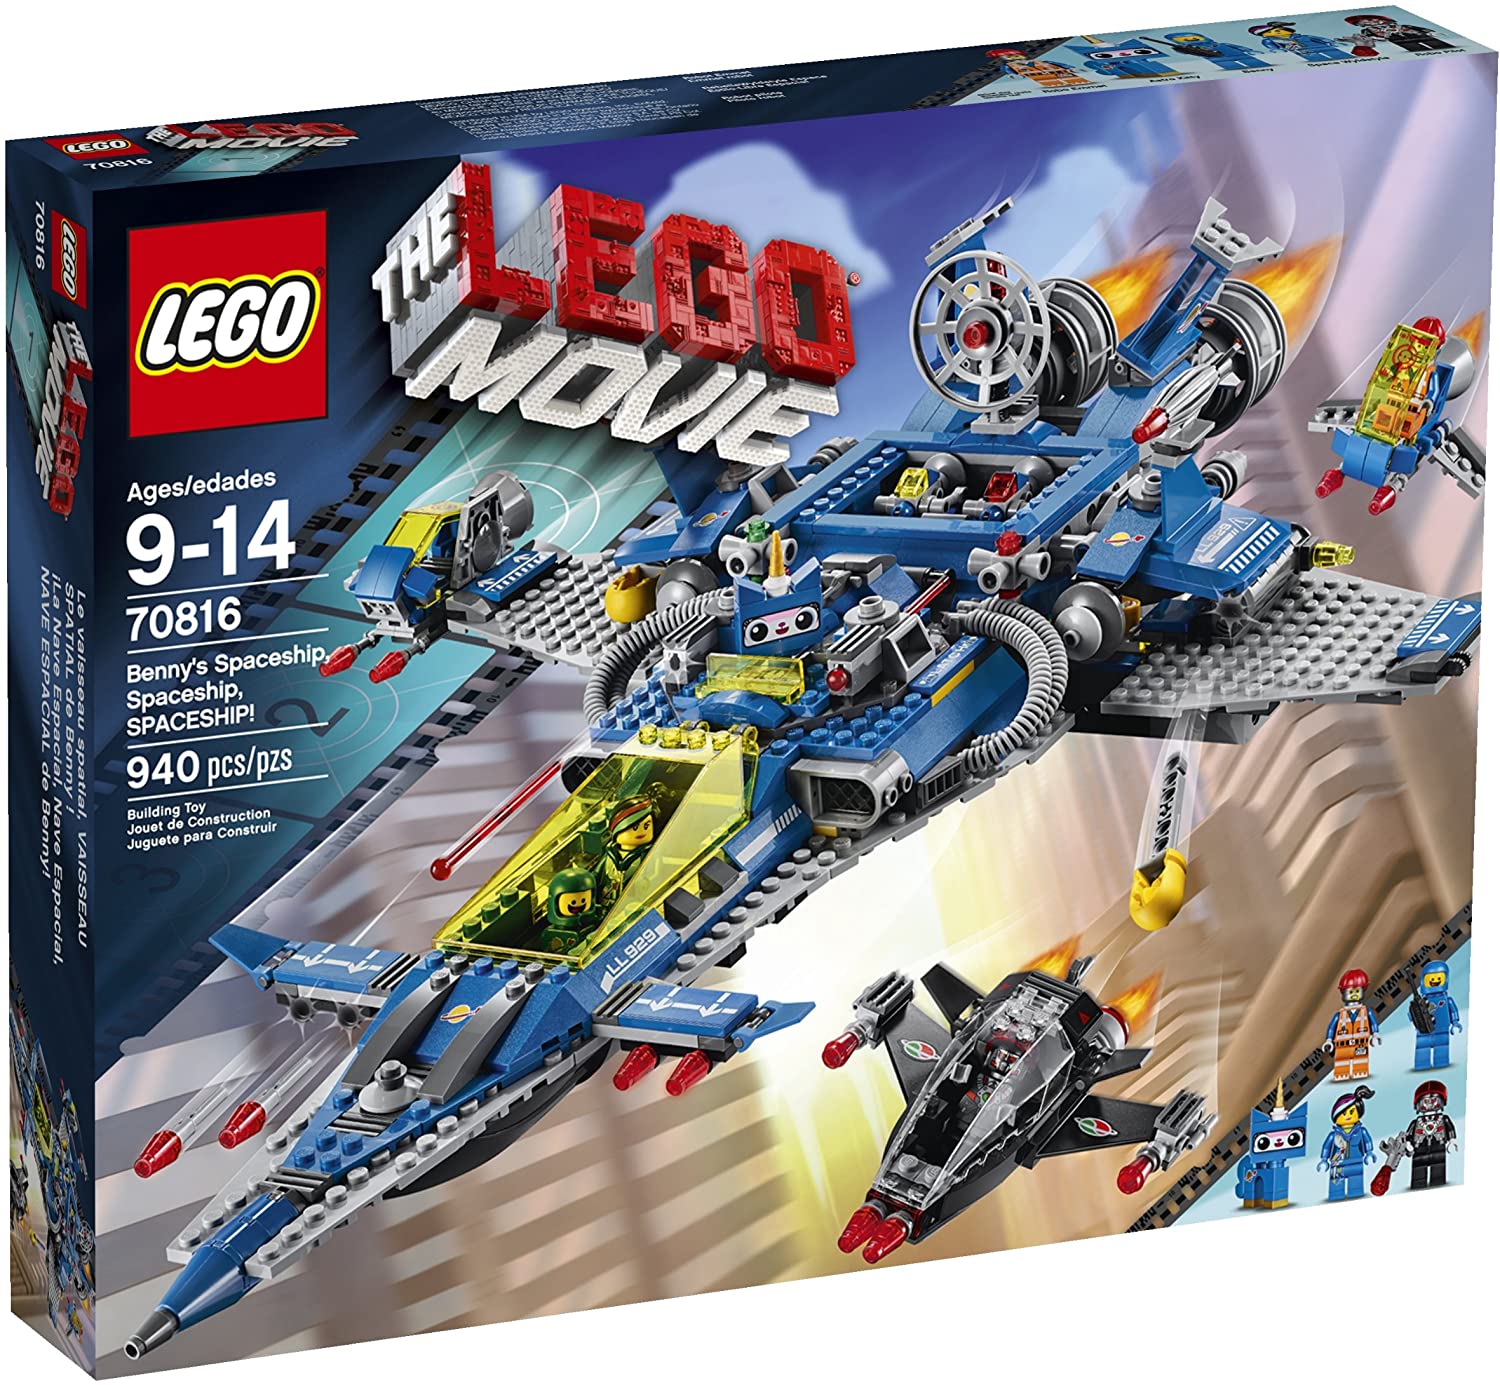 LEGO The LEGO Movie Rescue Reinforcements Set 70813 - US